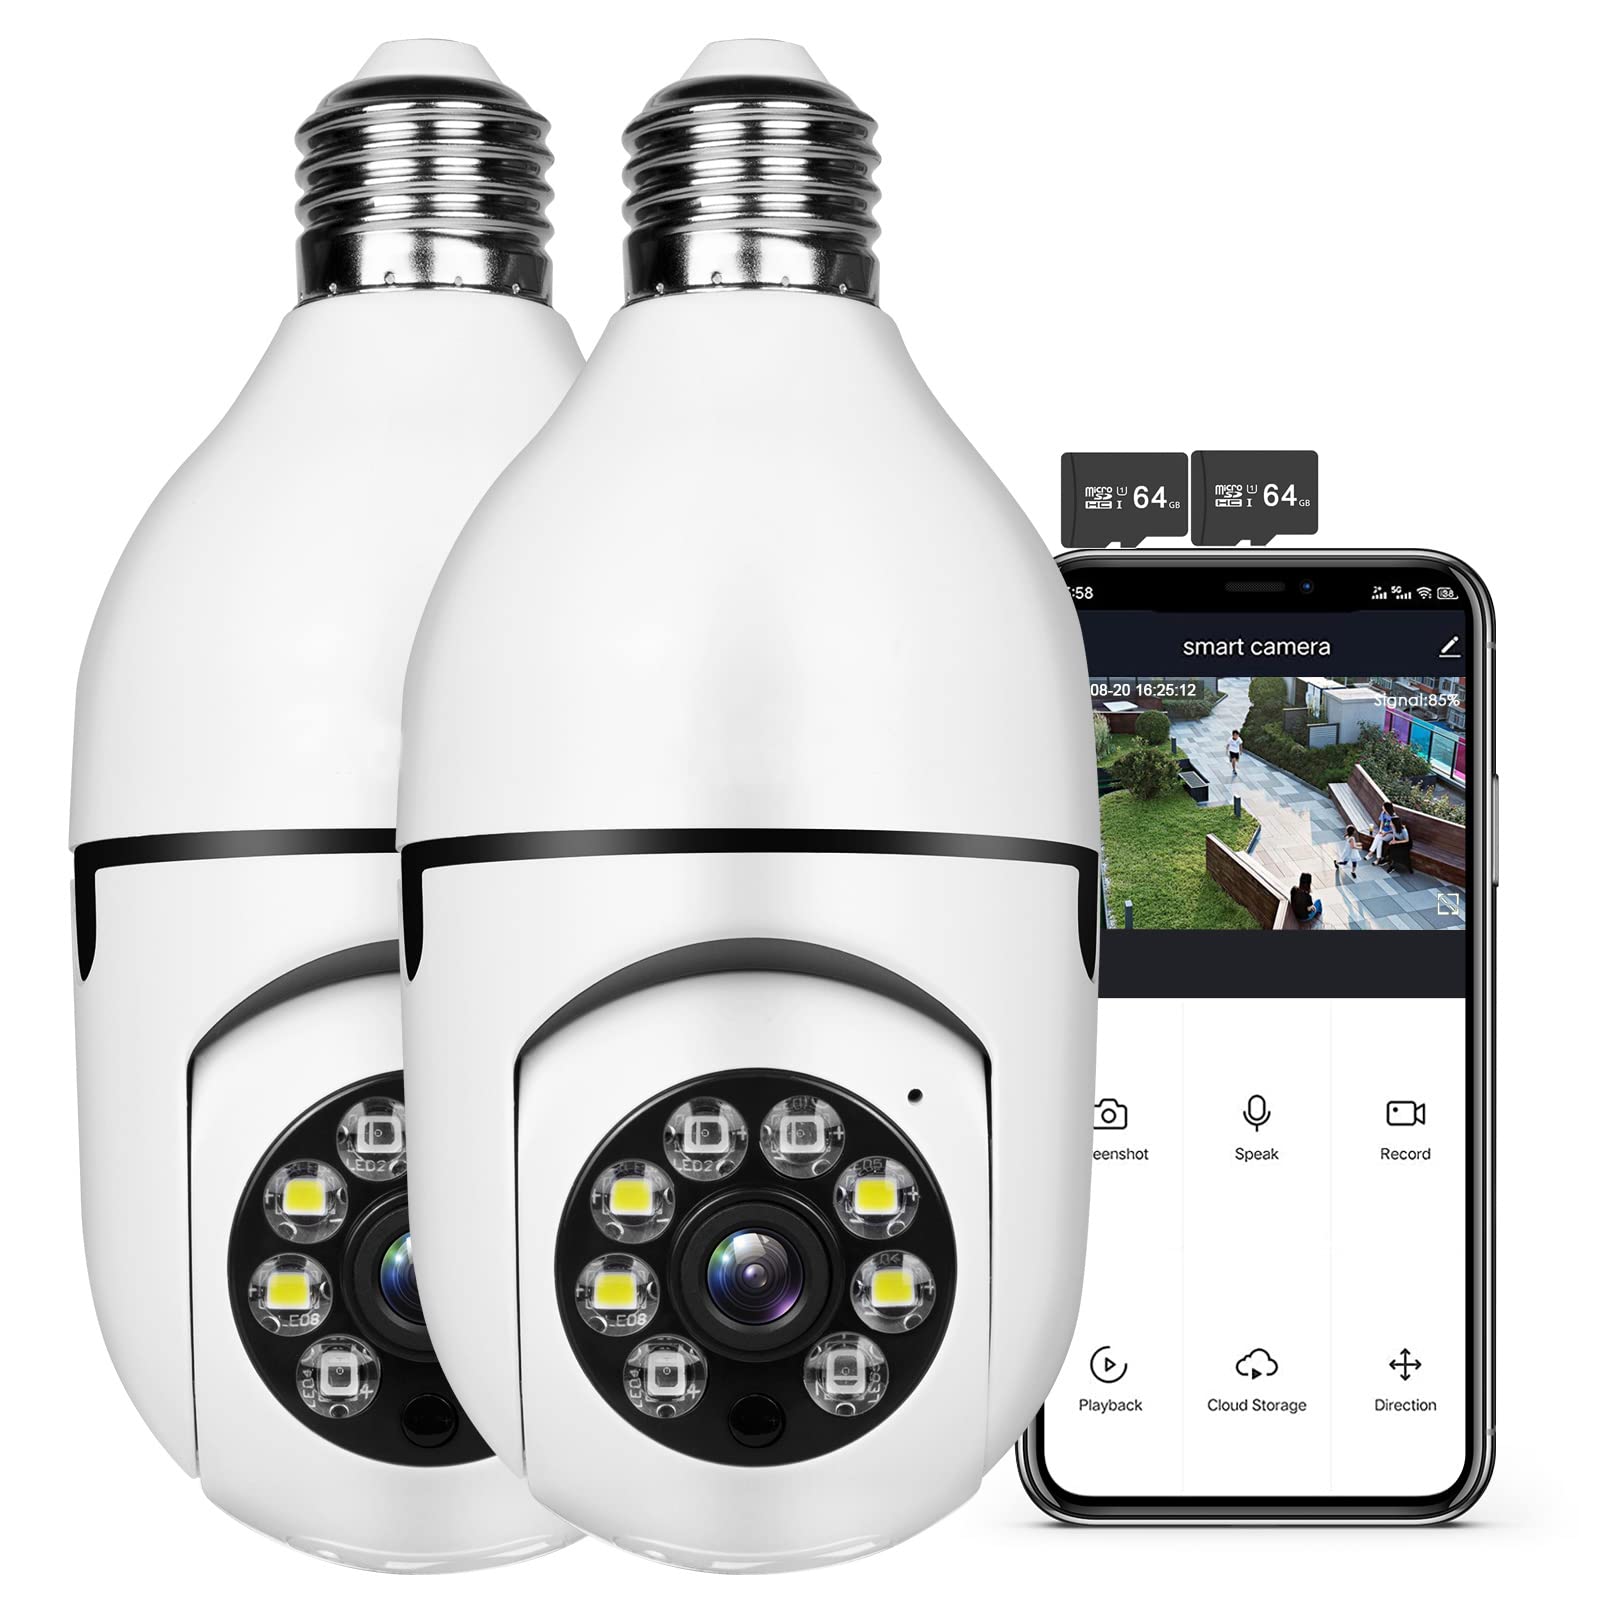 UPULTRA Security Wireless Camera WiFi 1080P Smart for Home Surveillance Screw into The E27 Socket Spotlight Alarm Color Night